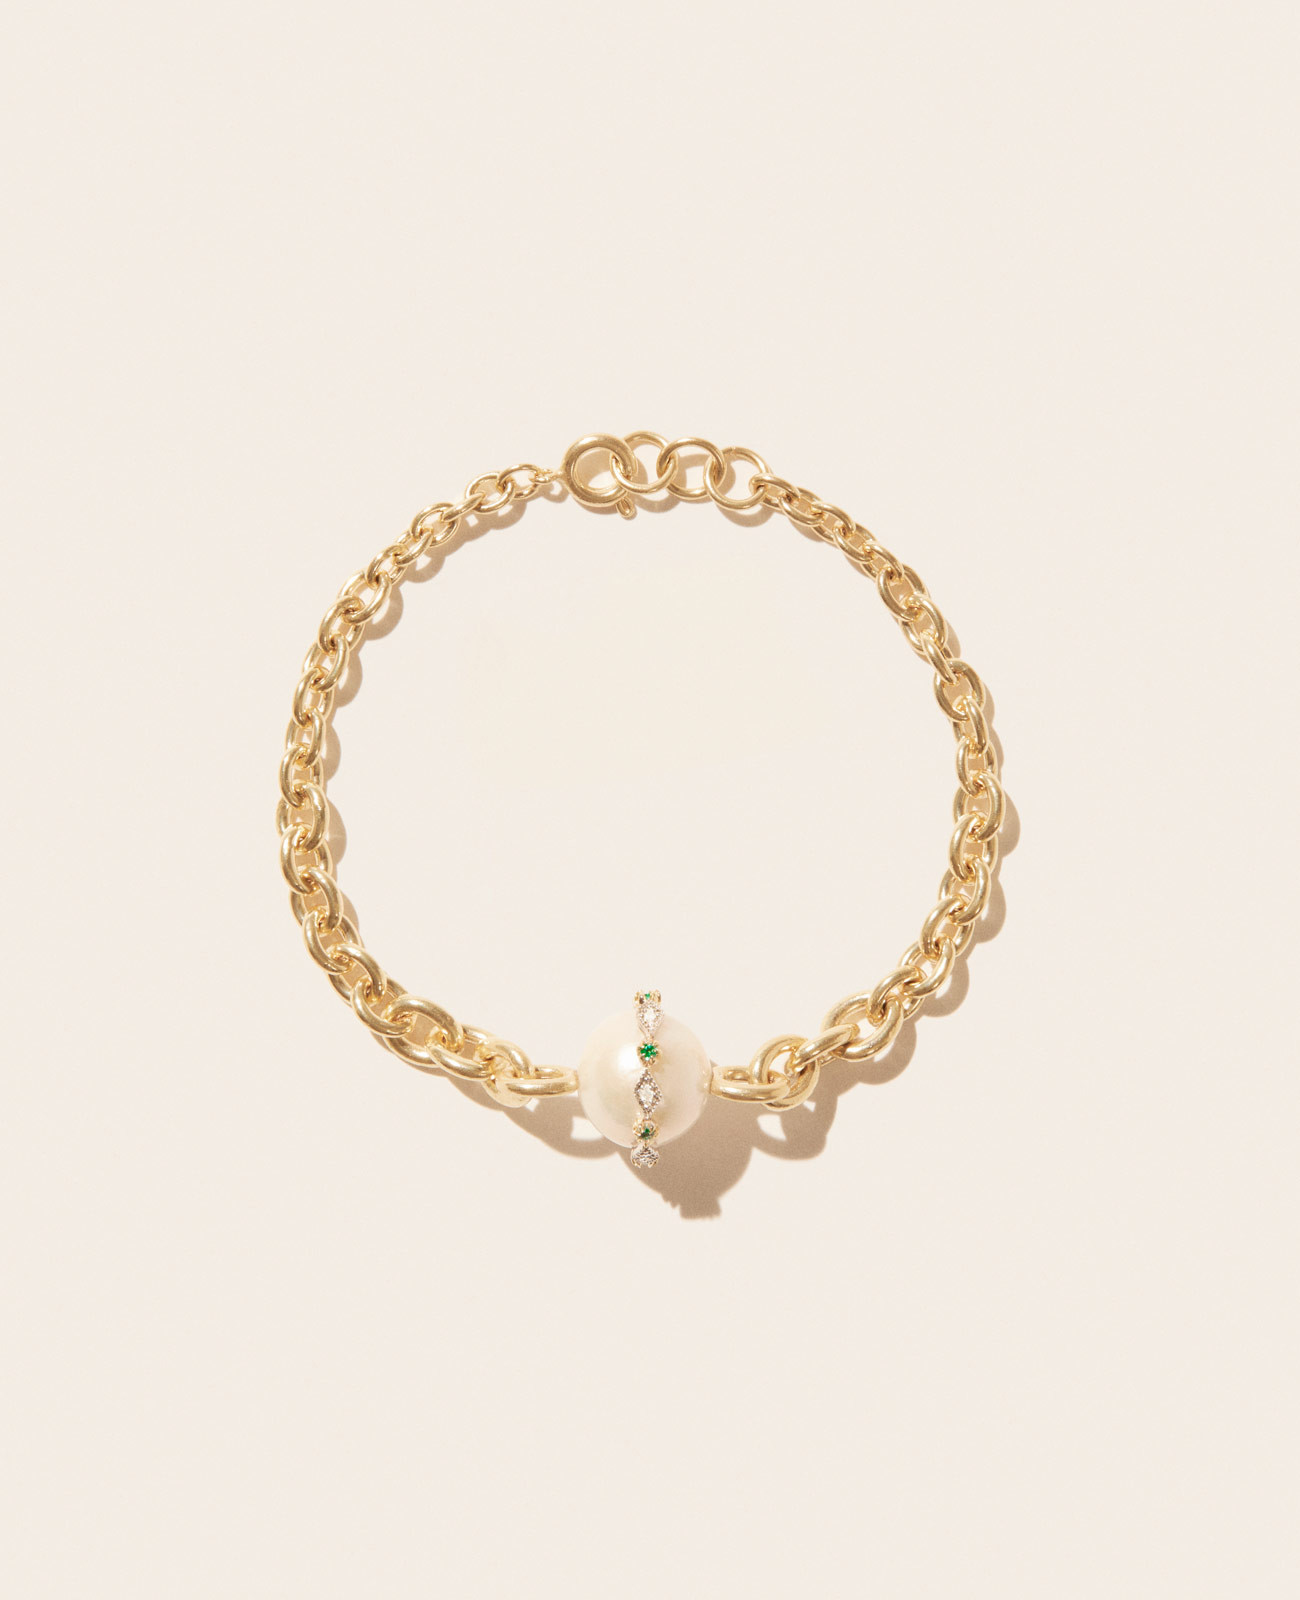 CHELSEA N°3 bracelet pascale monvoisin jewelry paris